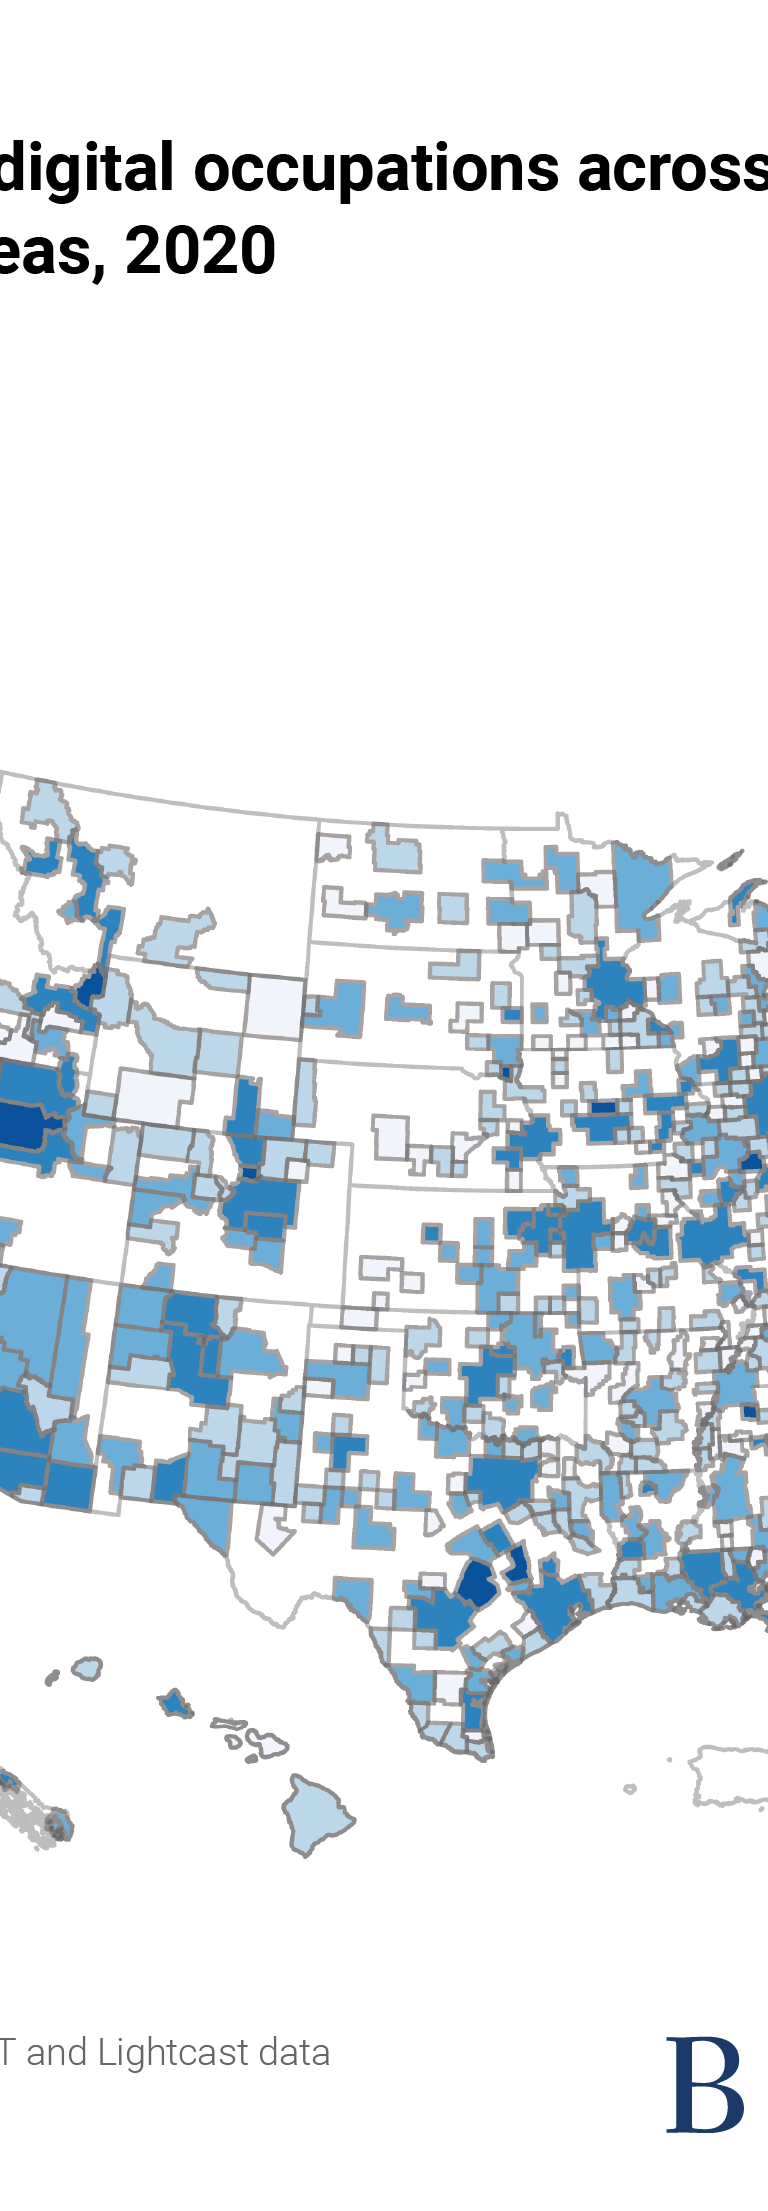 Map 1: Percentage of high digital occupations across U.S. metropolitan and micropolitan areas, 2020